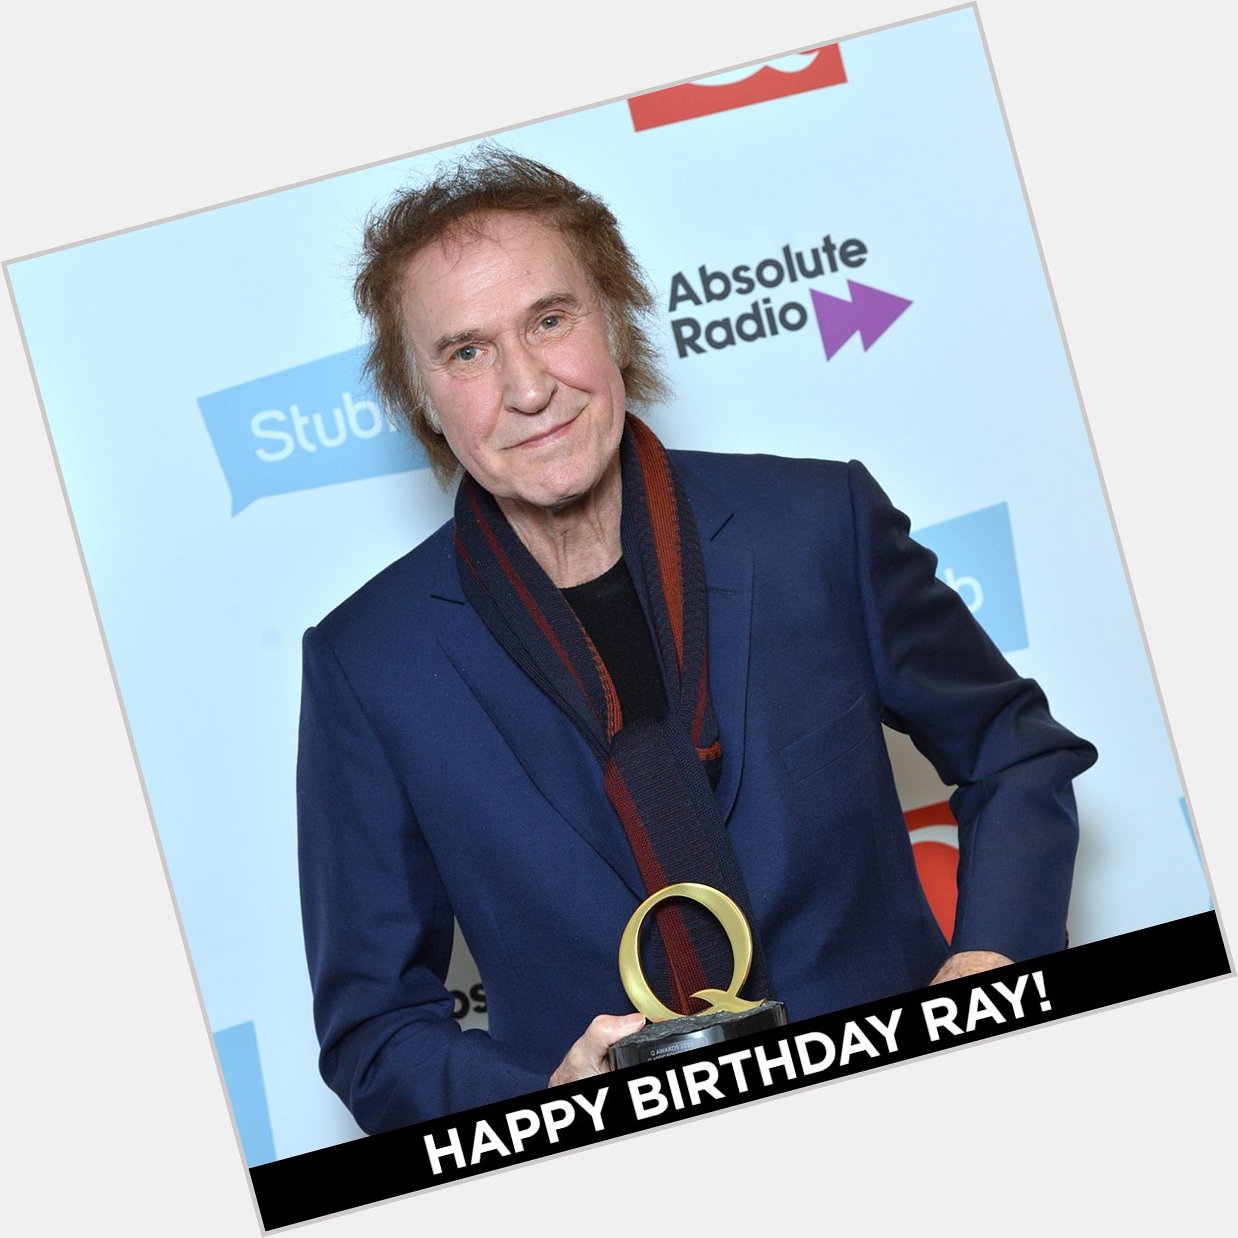 Happy birthday to an icon of British music - Sir Ray Davies of 